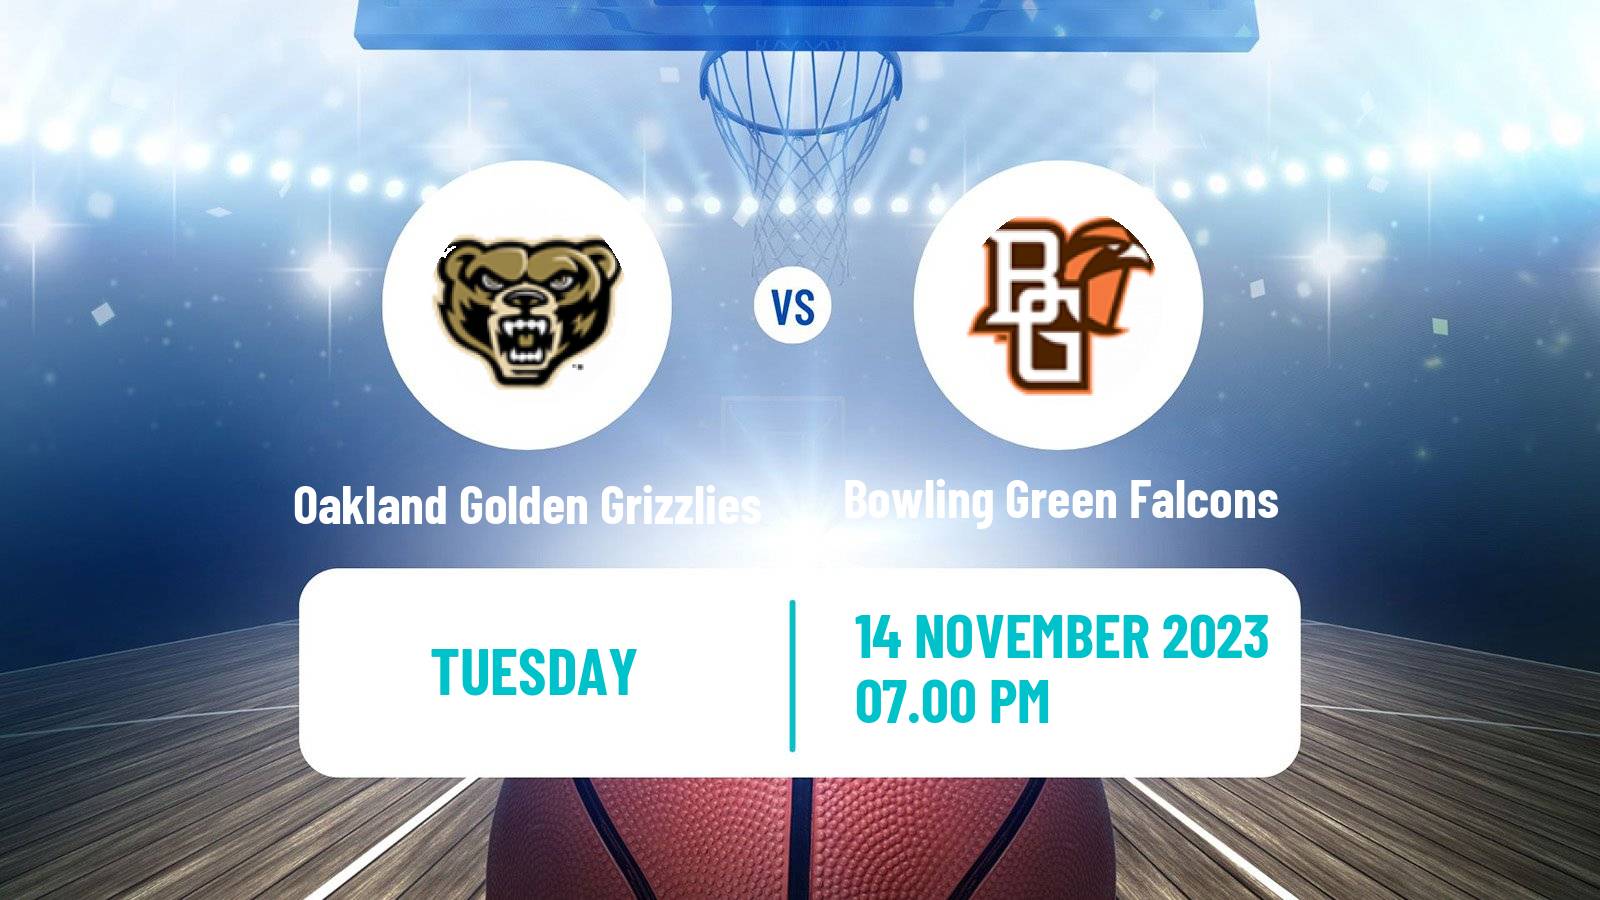 Basketball NCAA College Basketball Oakland Golden Grizzlies - Bowling Green Falcons